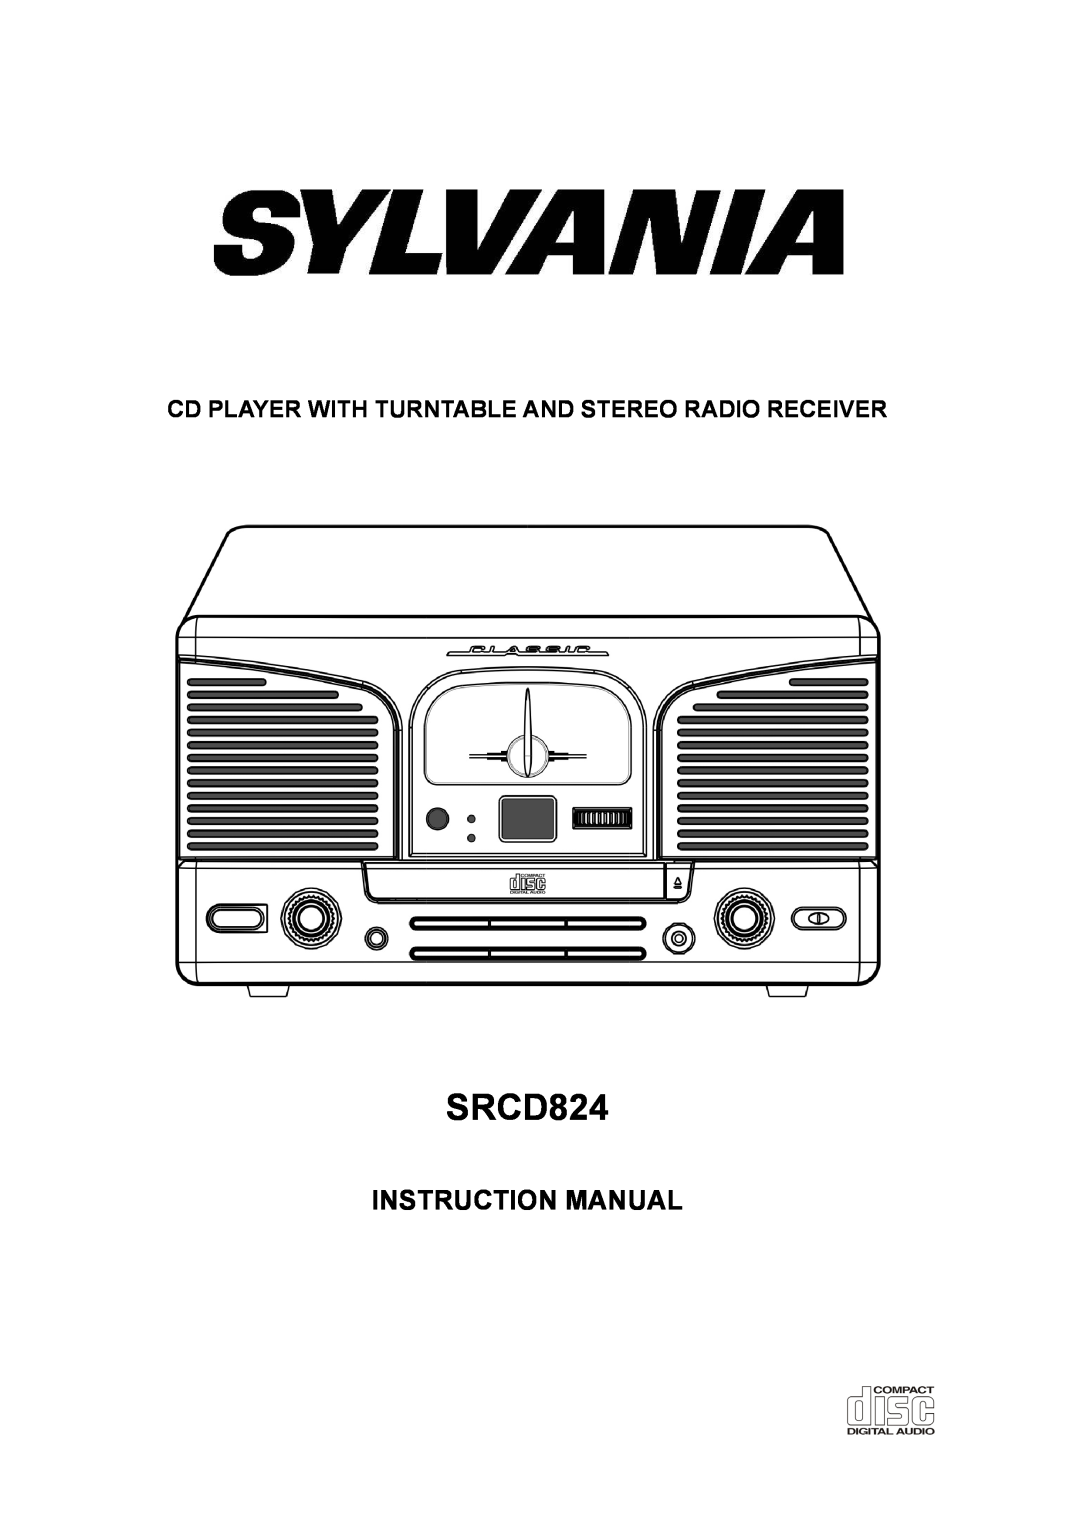 Sylvania SRCD824 instruction manual 